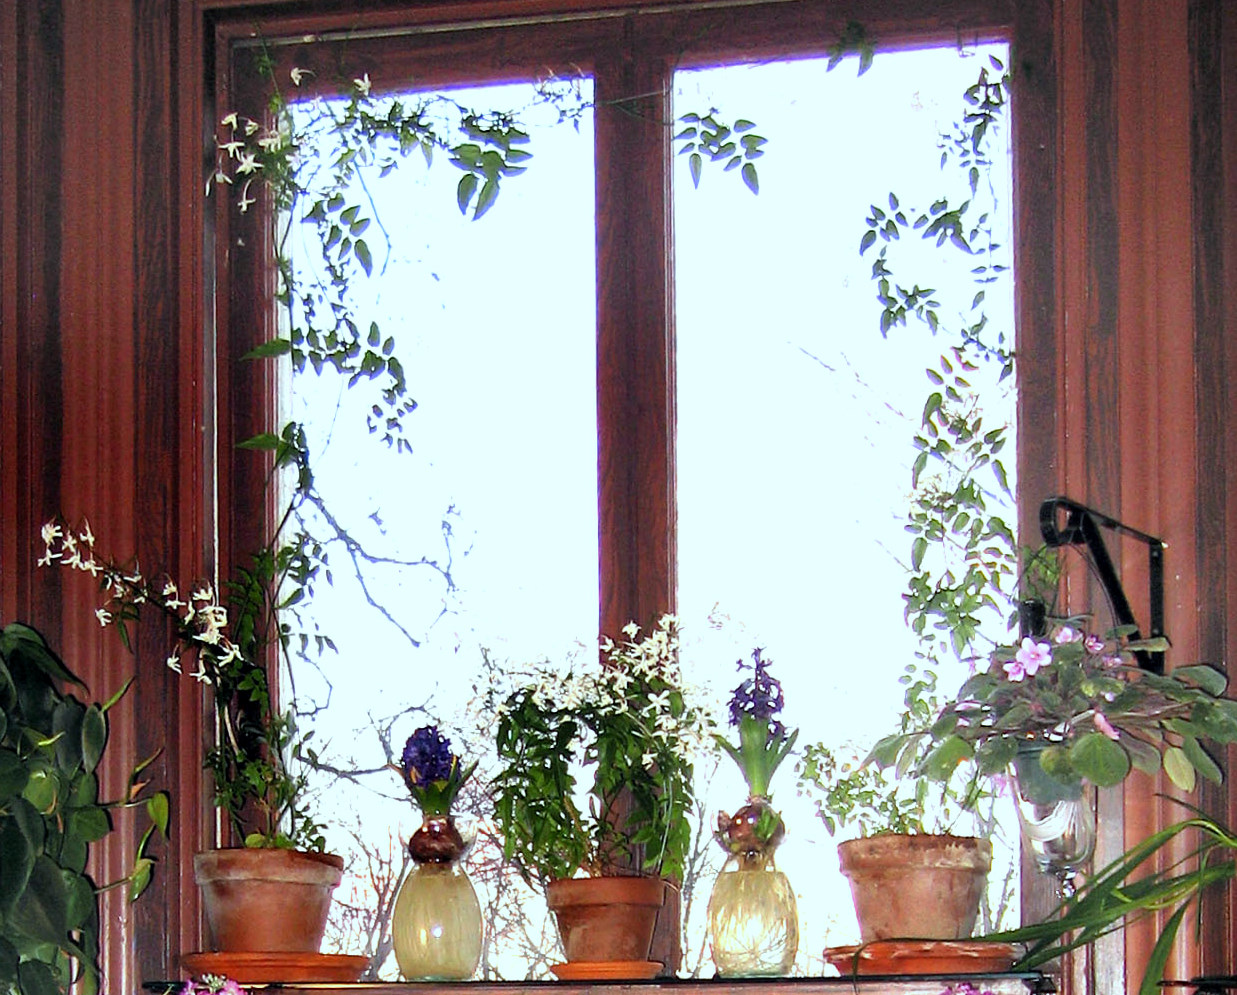 1 Scent Fragrant Jasmine Climber Jasminum Polyanthum Gardening Plant in Pot 